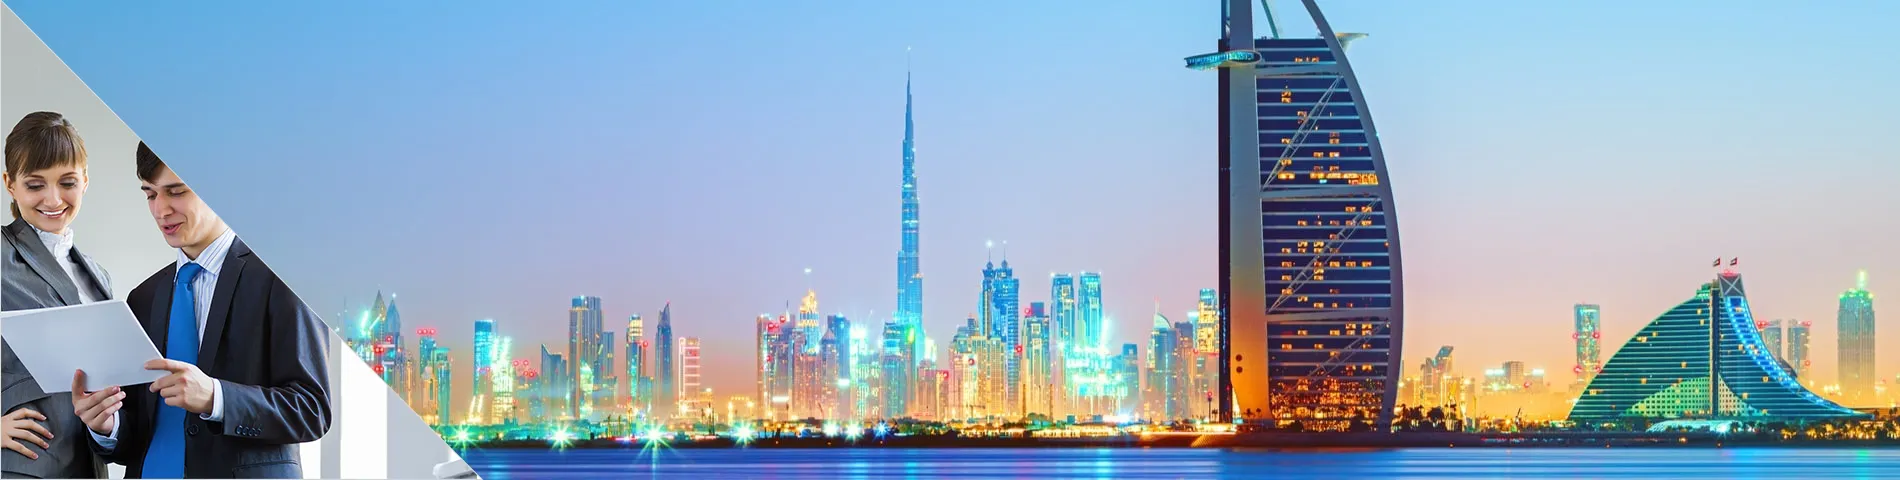 Dubai - Individuell businesskurs